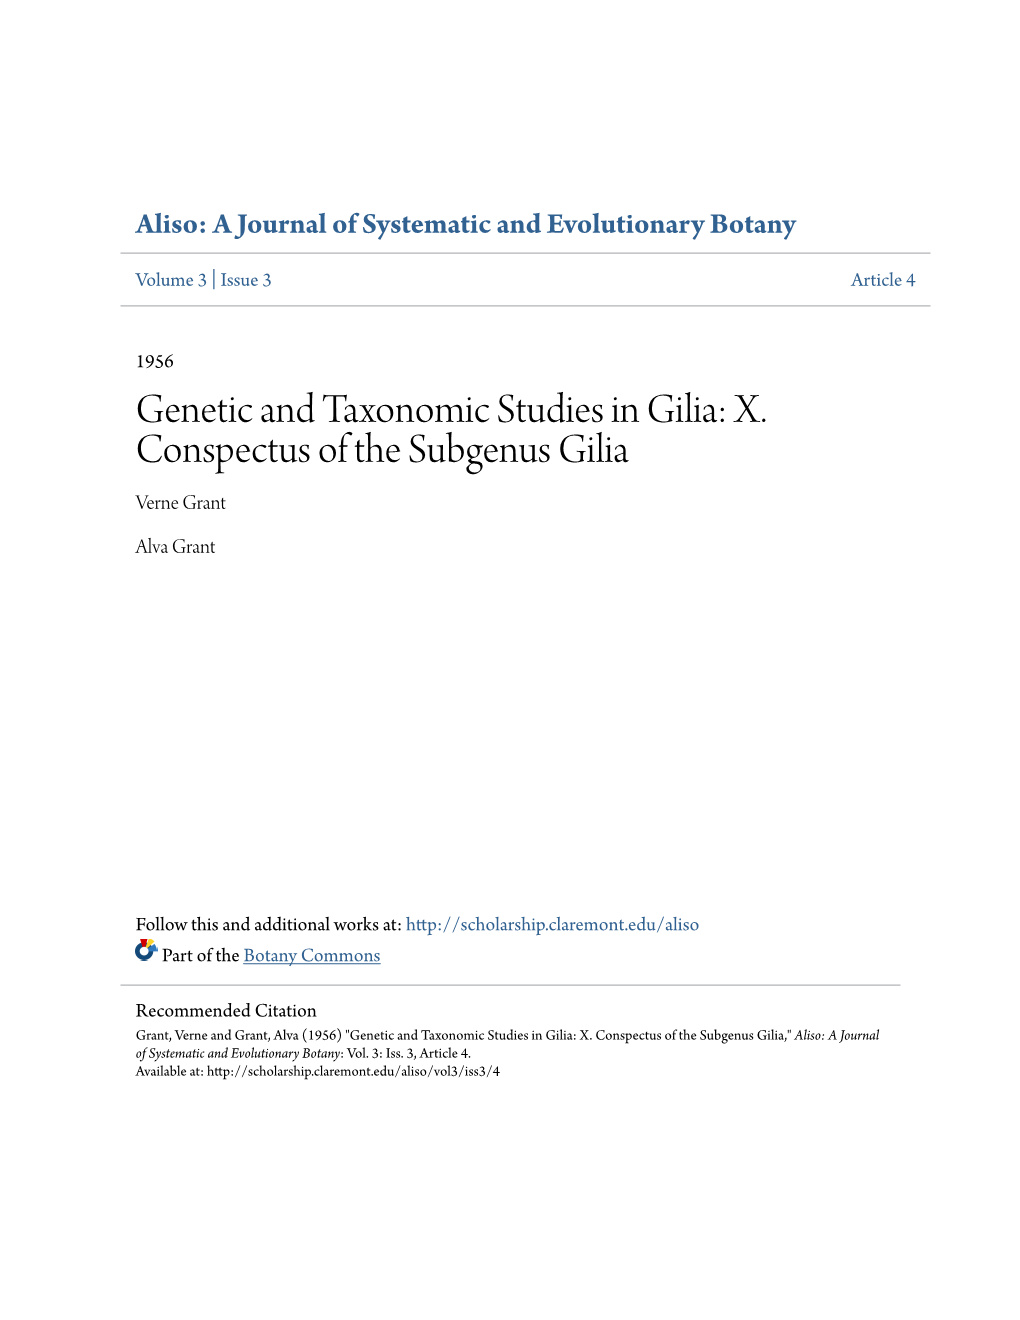 Genetic and Taxonomic Studies in Gilia: X